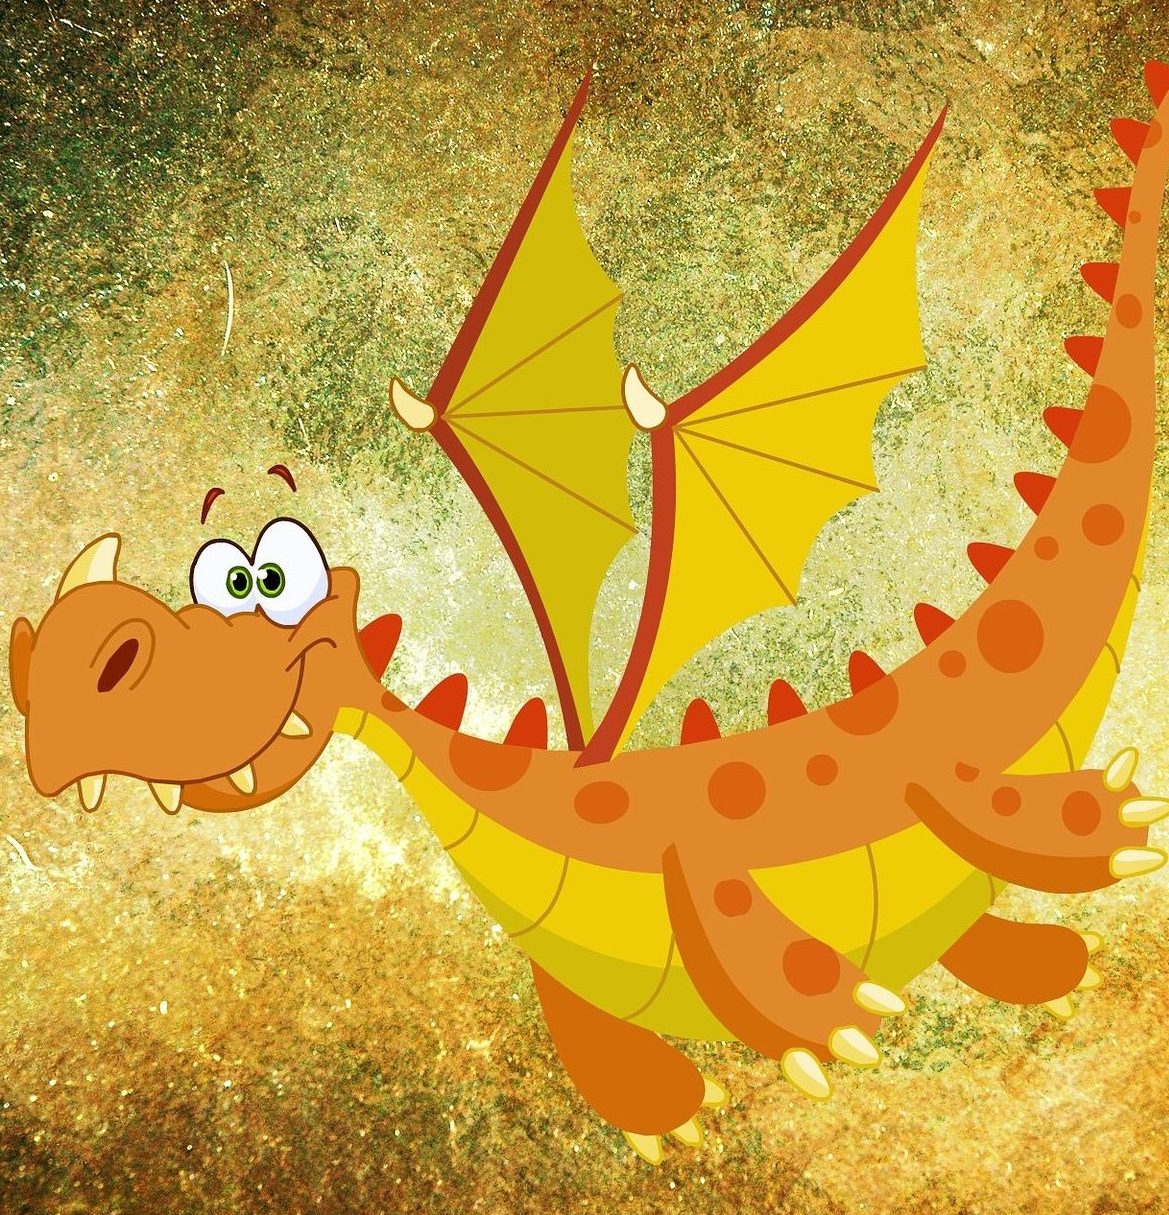 Dragon. Photo: Pixabay